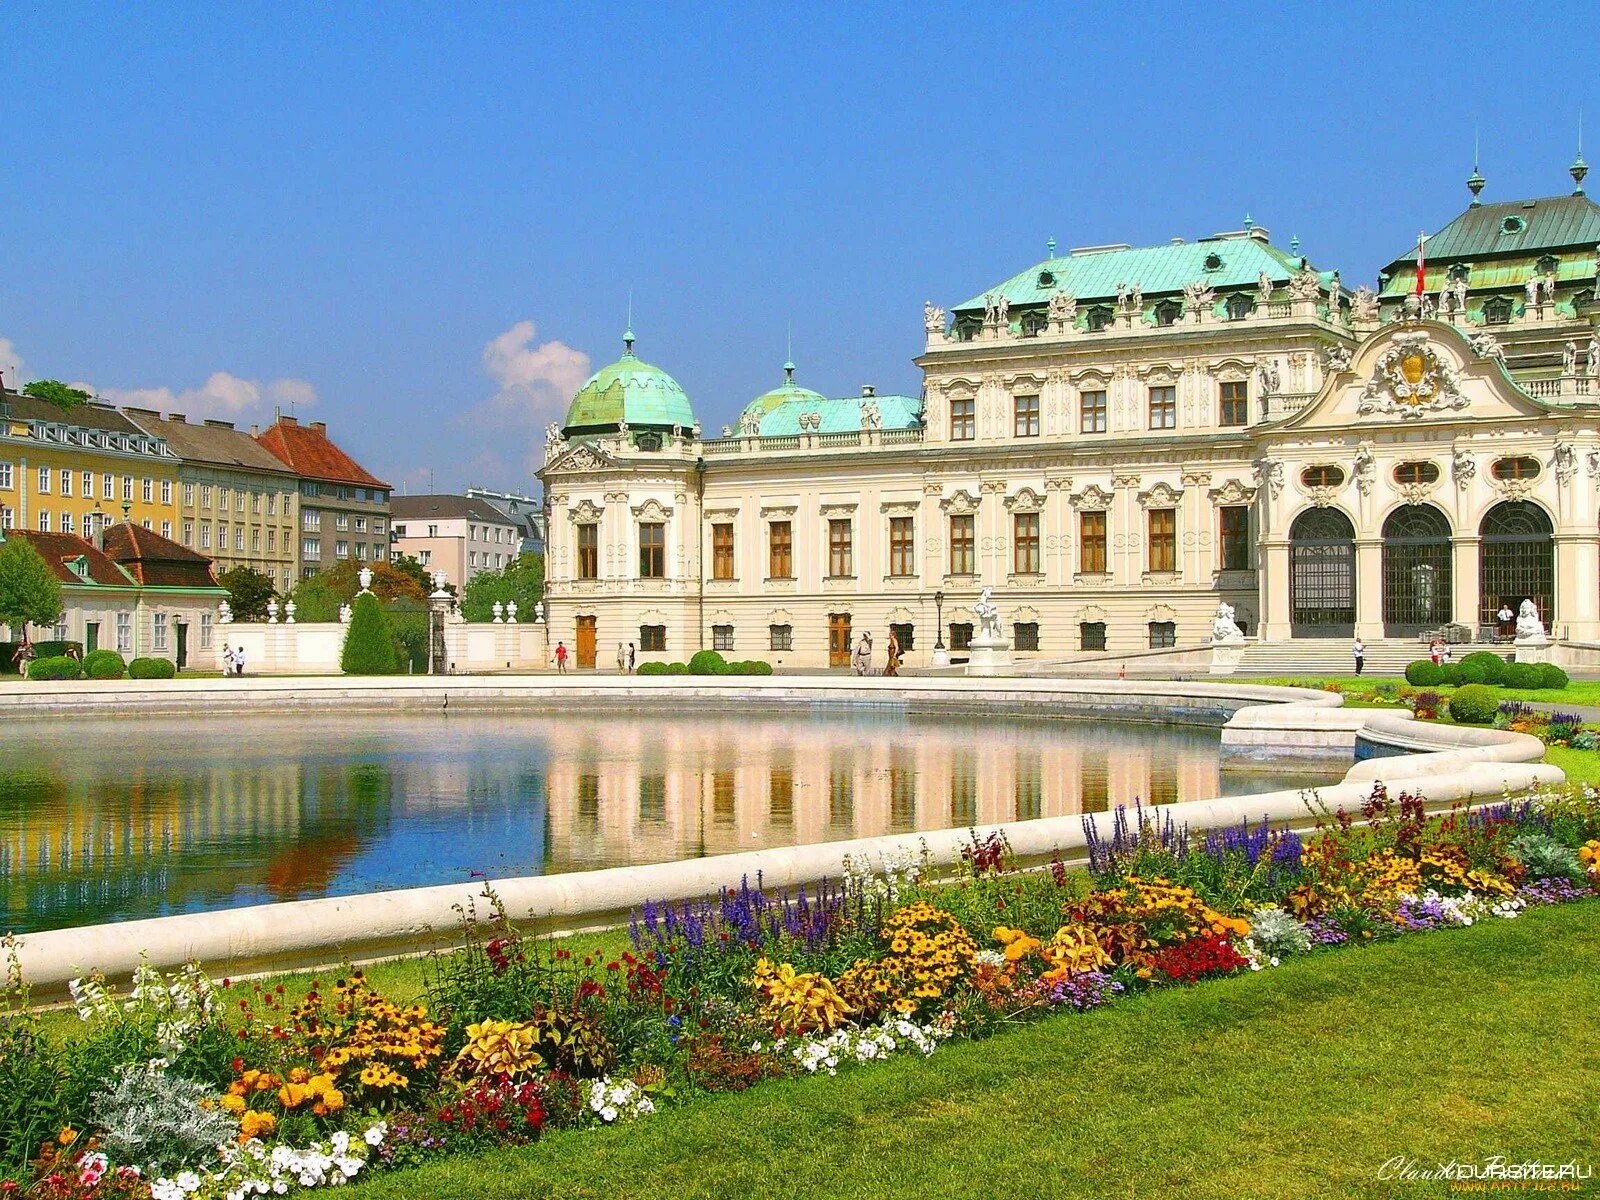 Дворец Бельведер Австрия. Австрия Виен. Галерея Бельведер Вена. Вена столица Австрии.